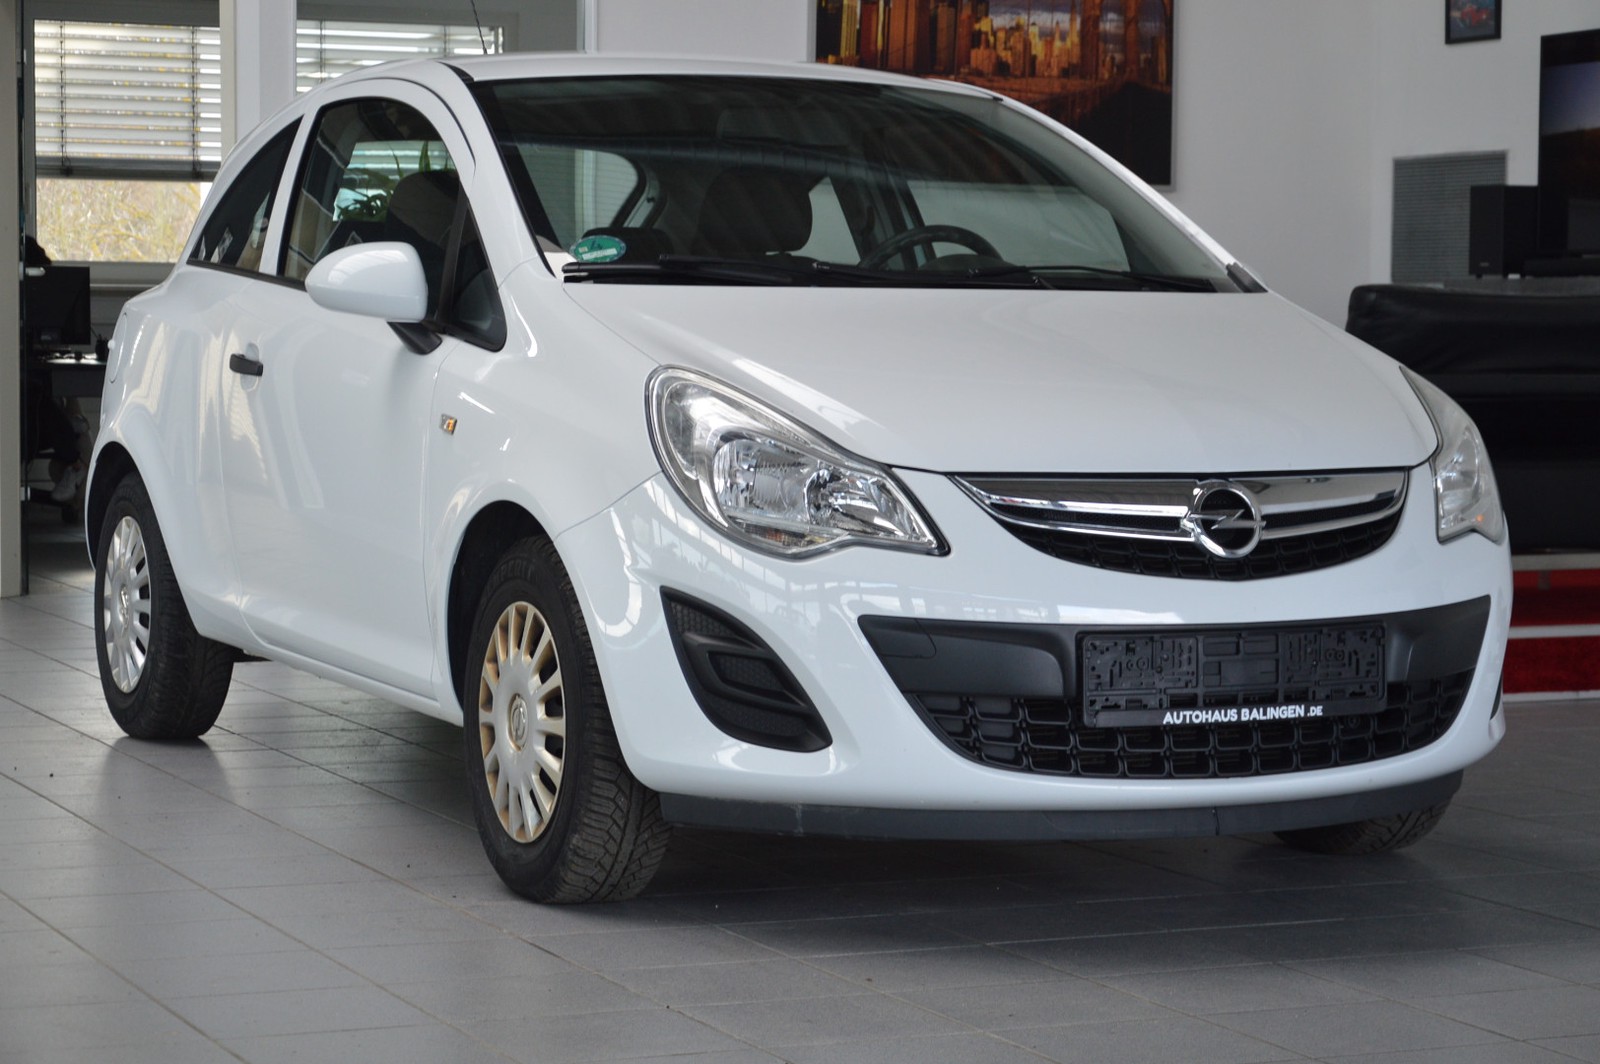 Opel Corsa D Selection gebraucht kaufen in Balingen Preis 4990 eur